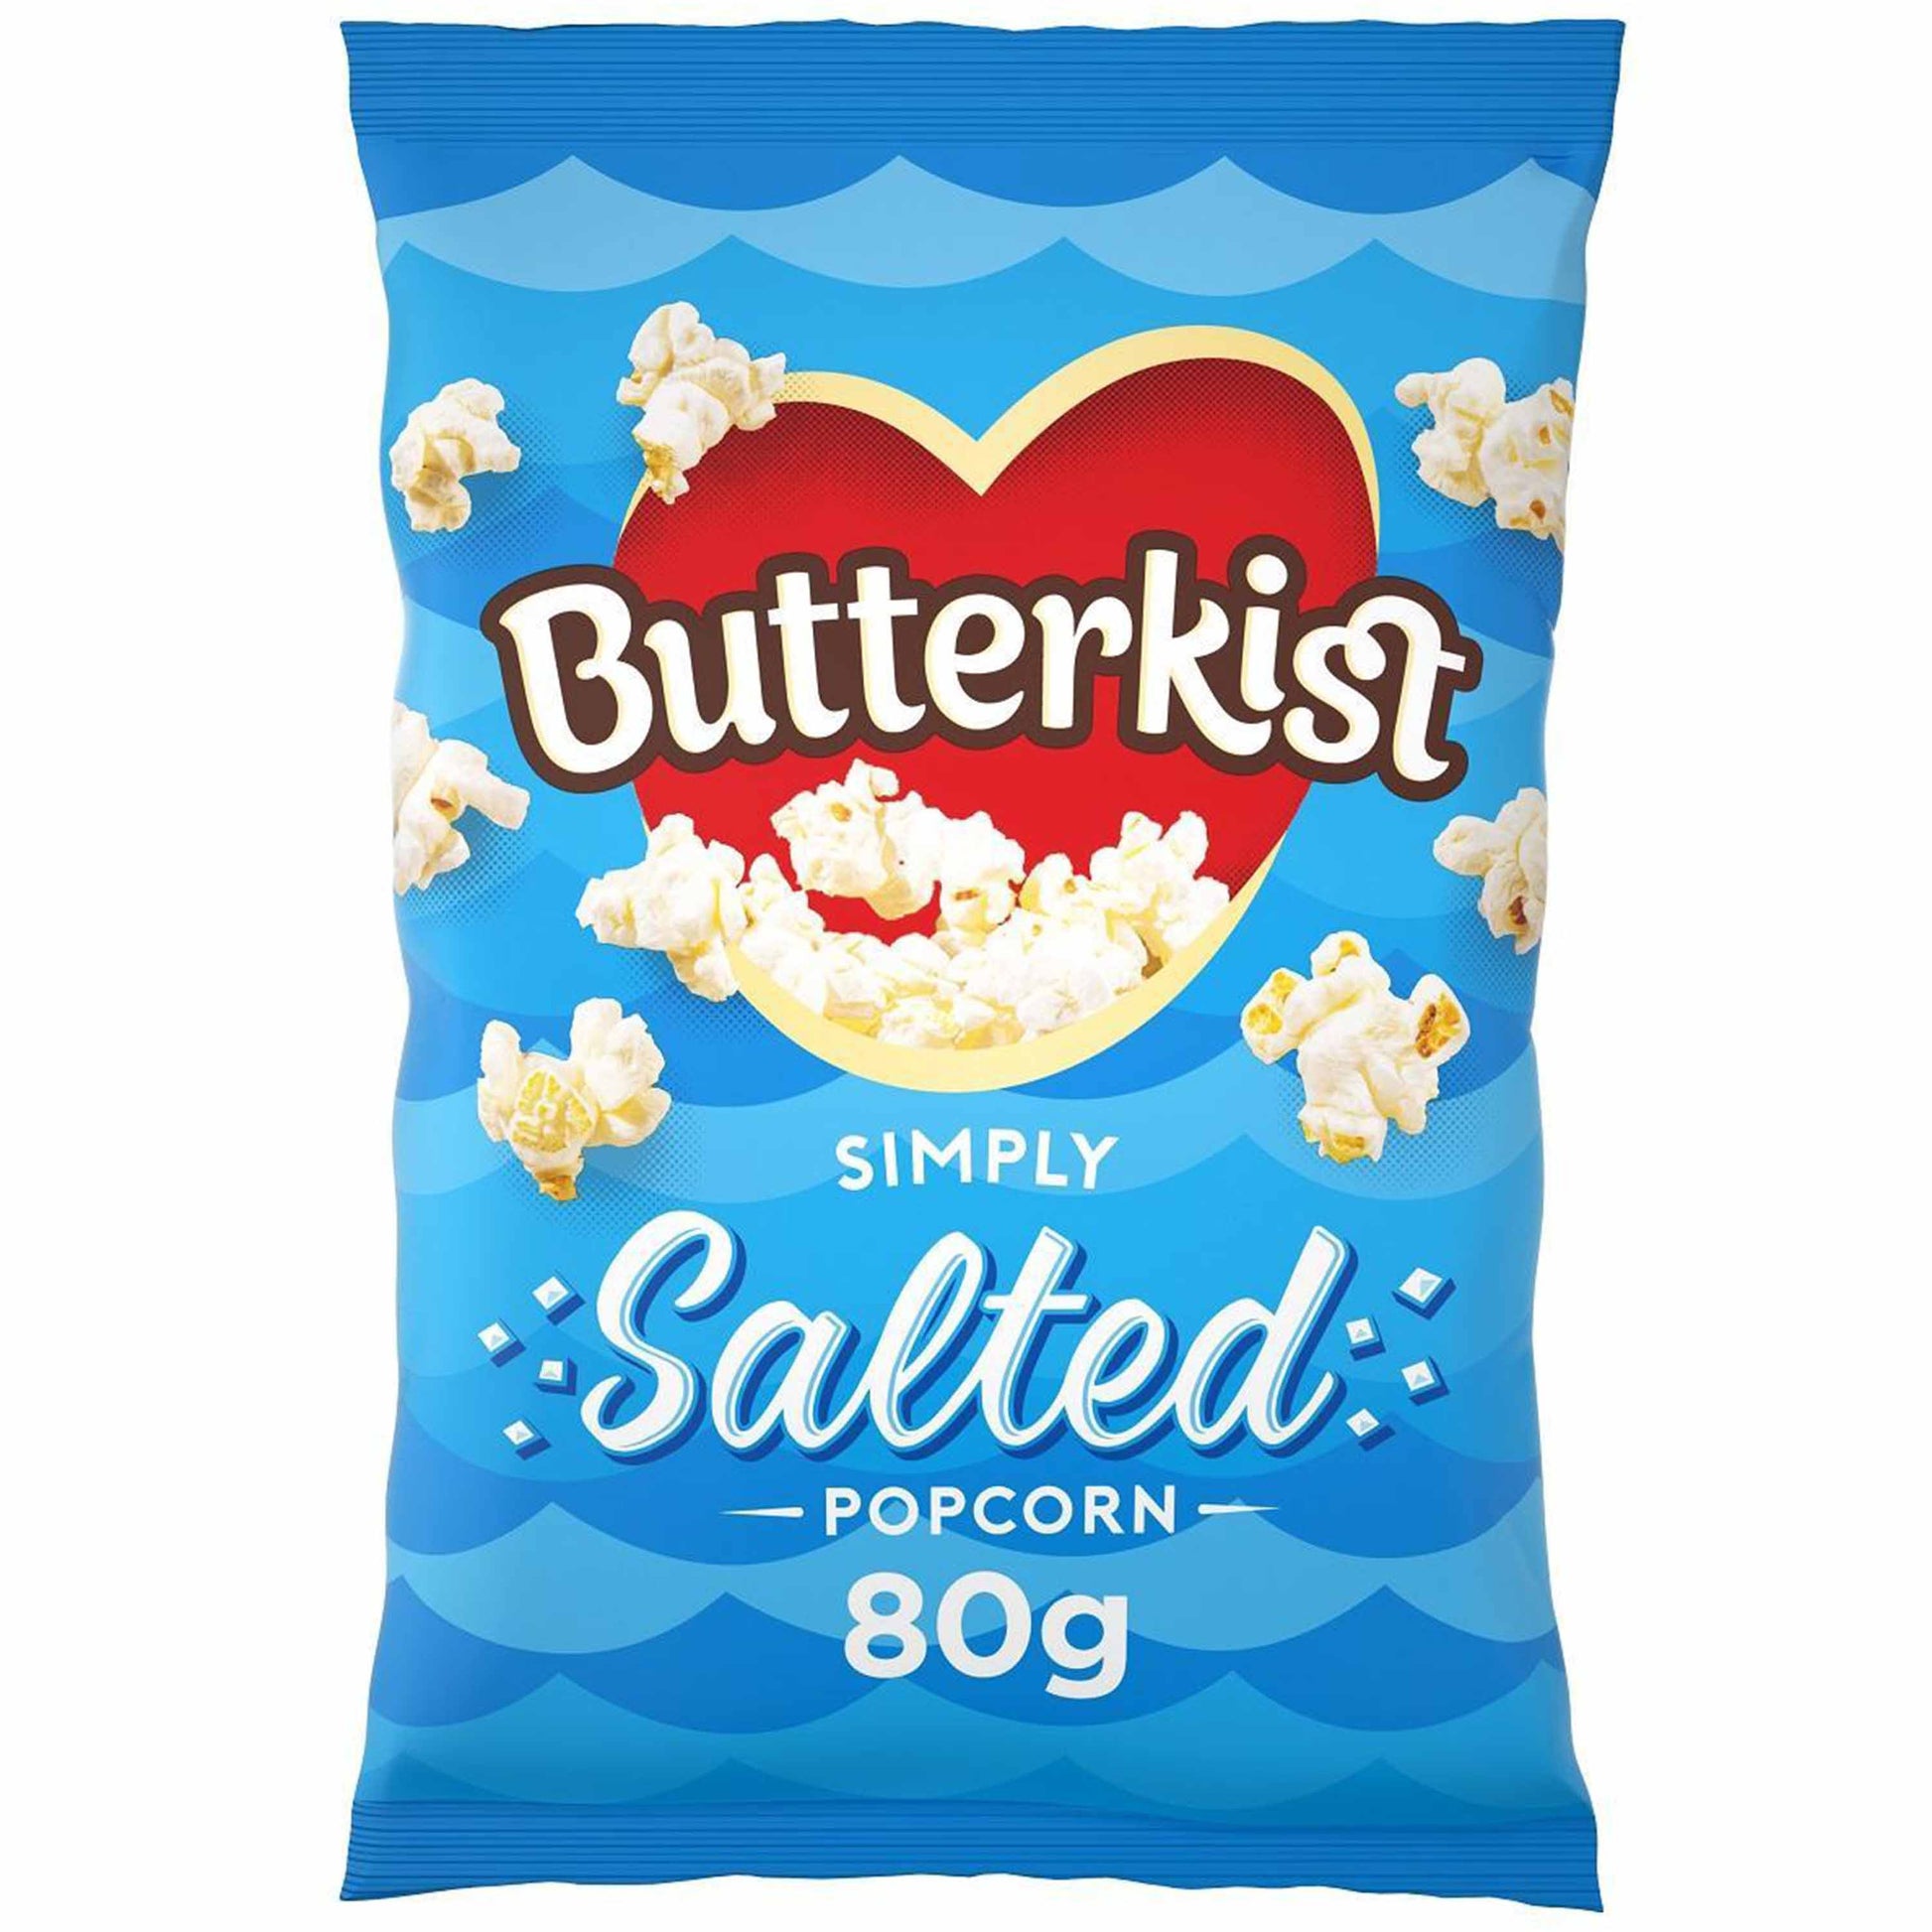 Butterkist Simply Salted Popcorn - 80g - BRITISH SNACKS